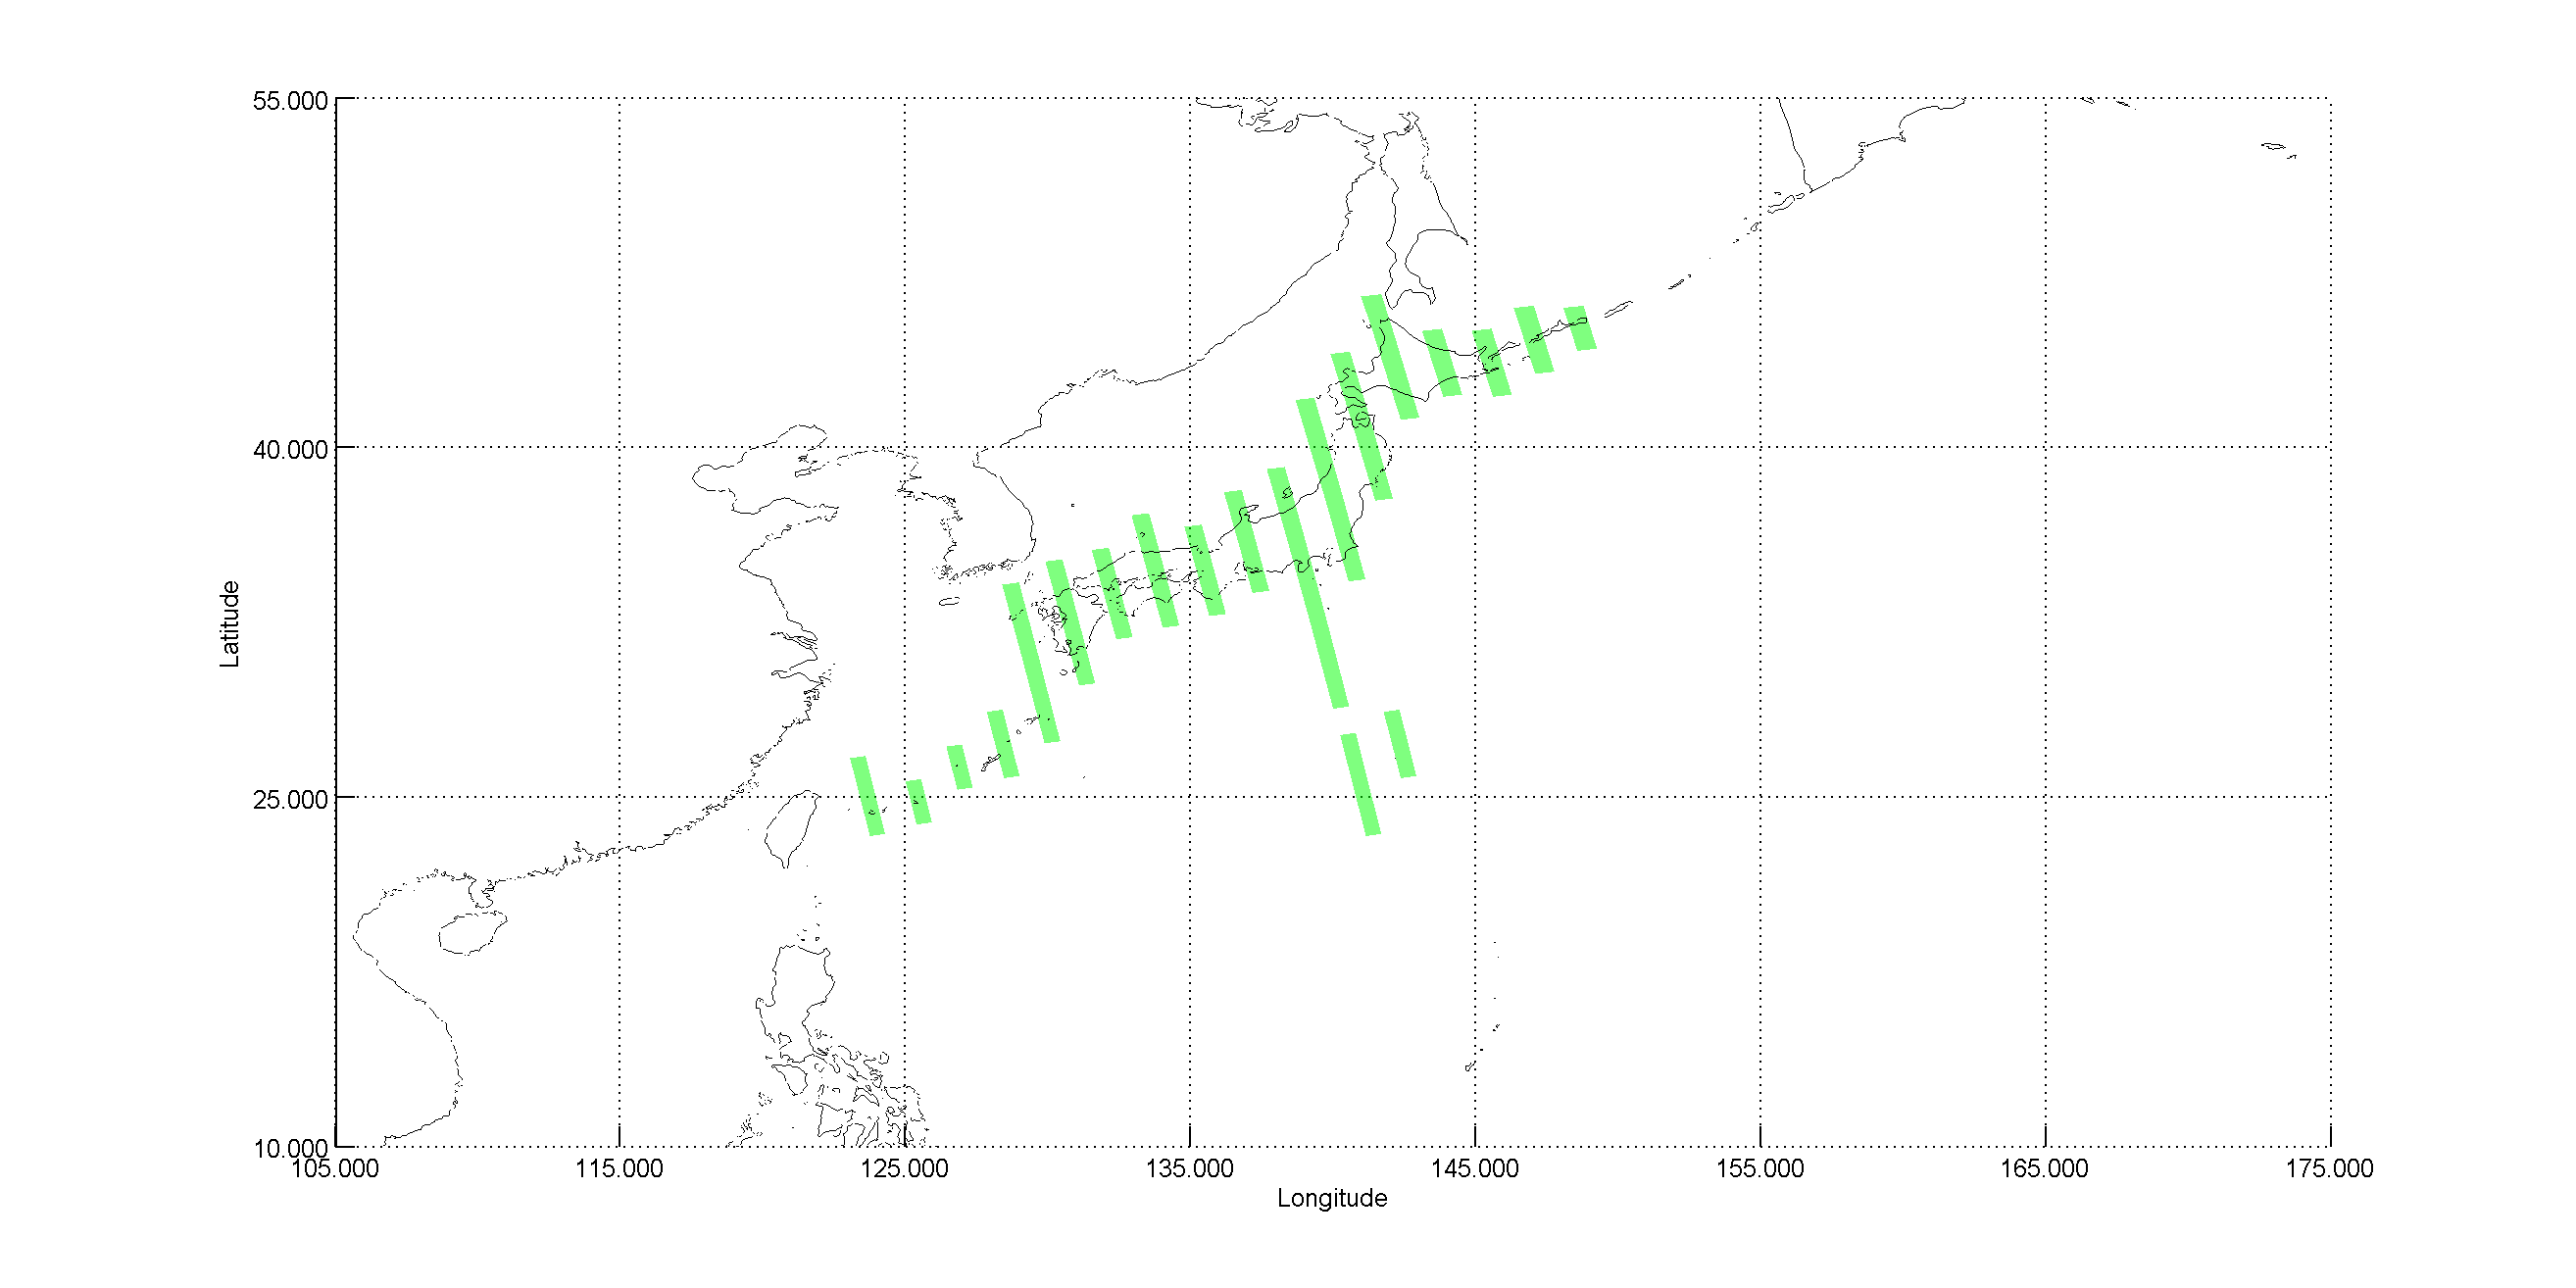 CYCLE_152 - Japan Ascending passes